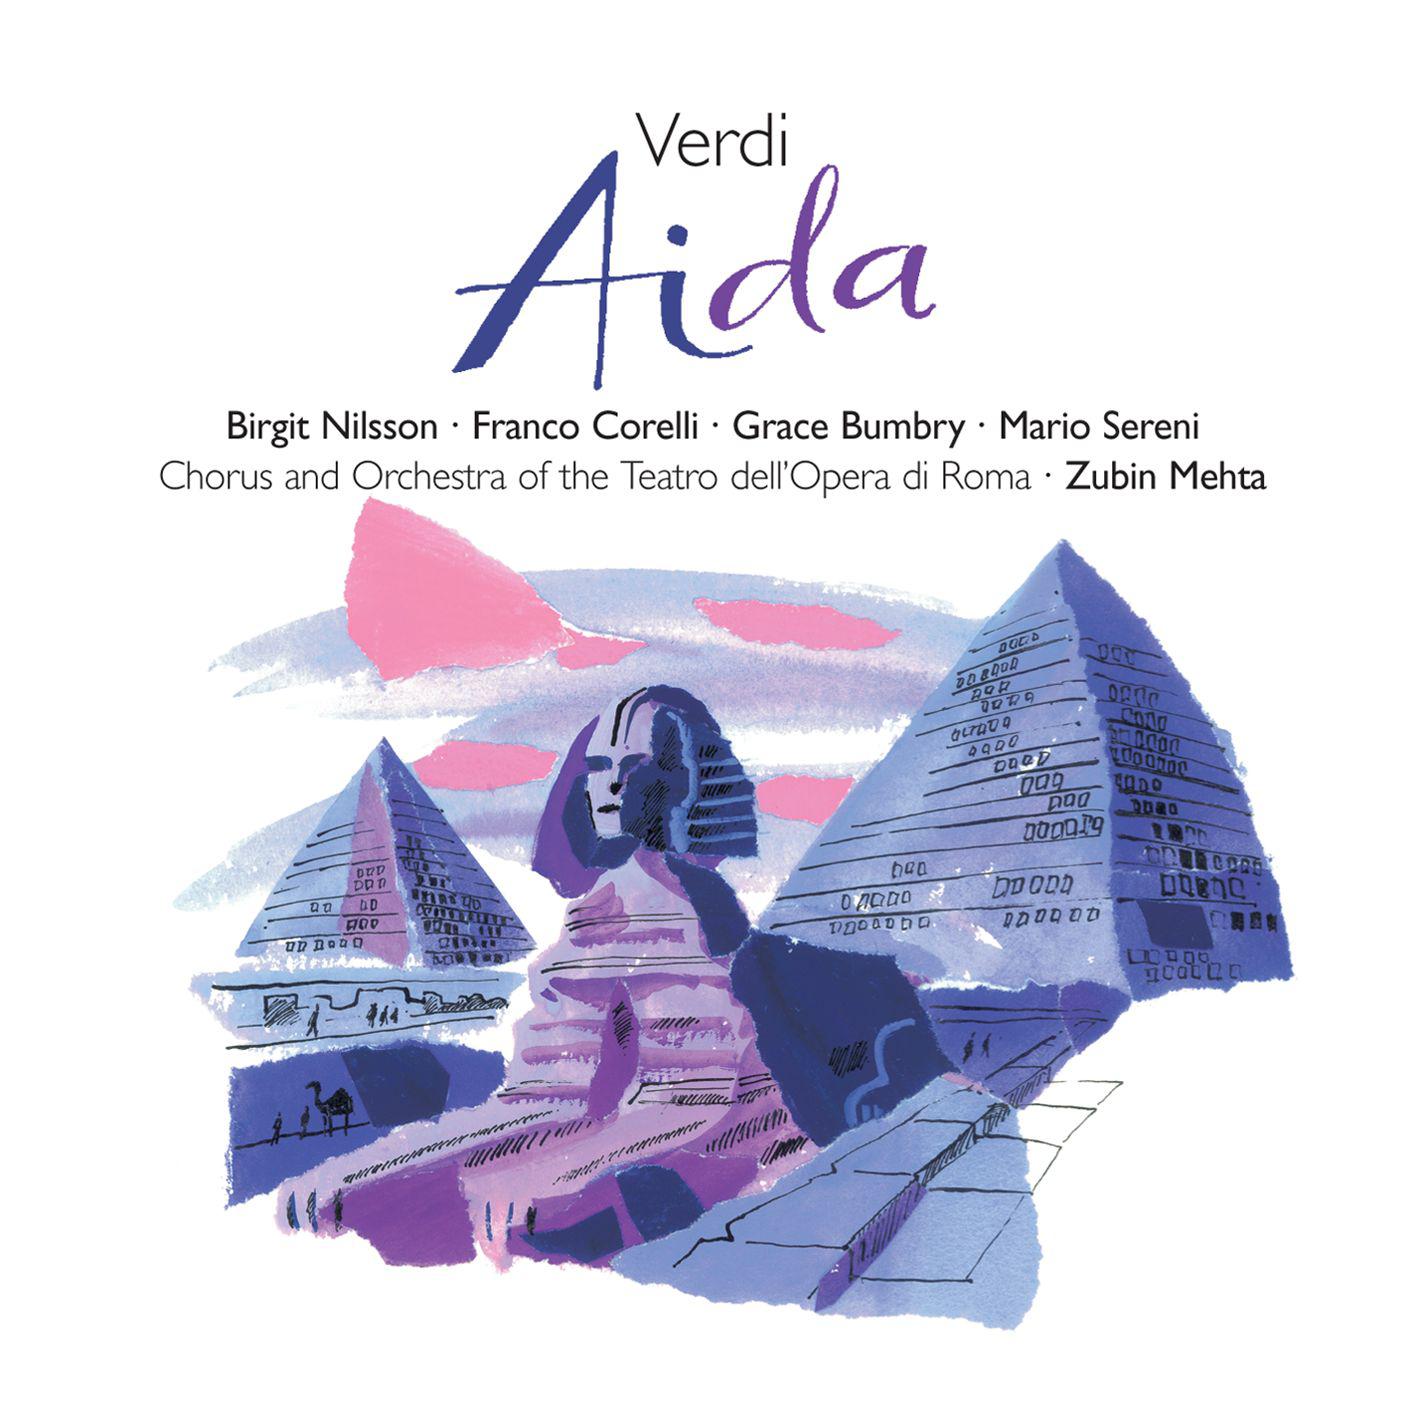 Aida, Act 3: Coro nel Tempio, "O tu che sei d'Osiride"